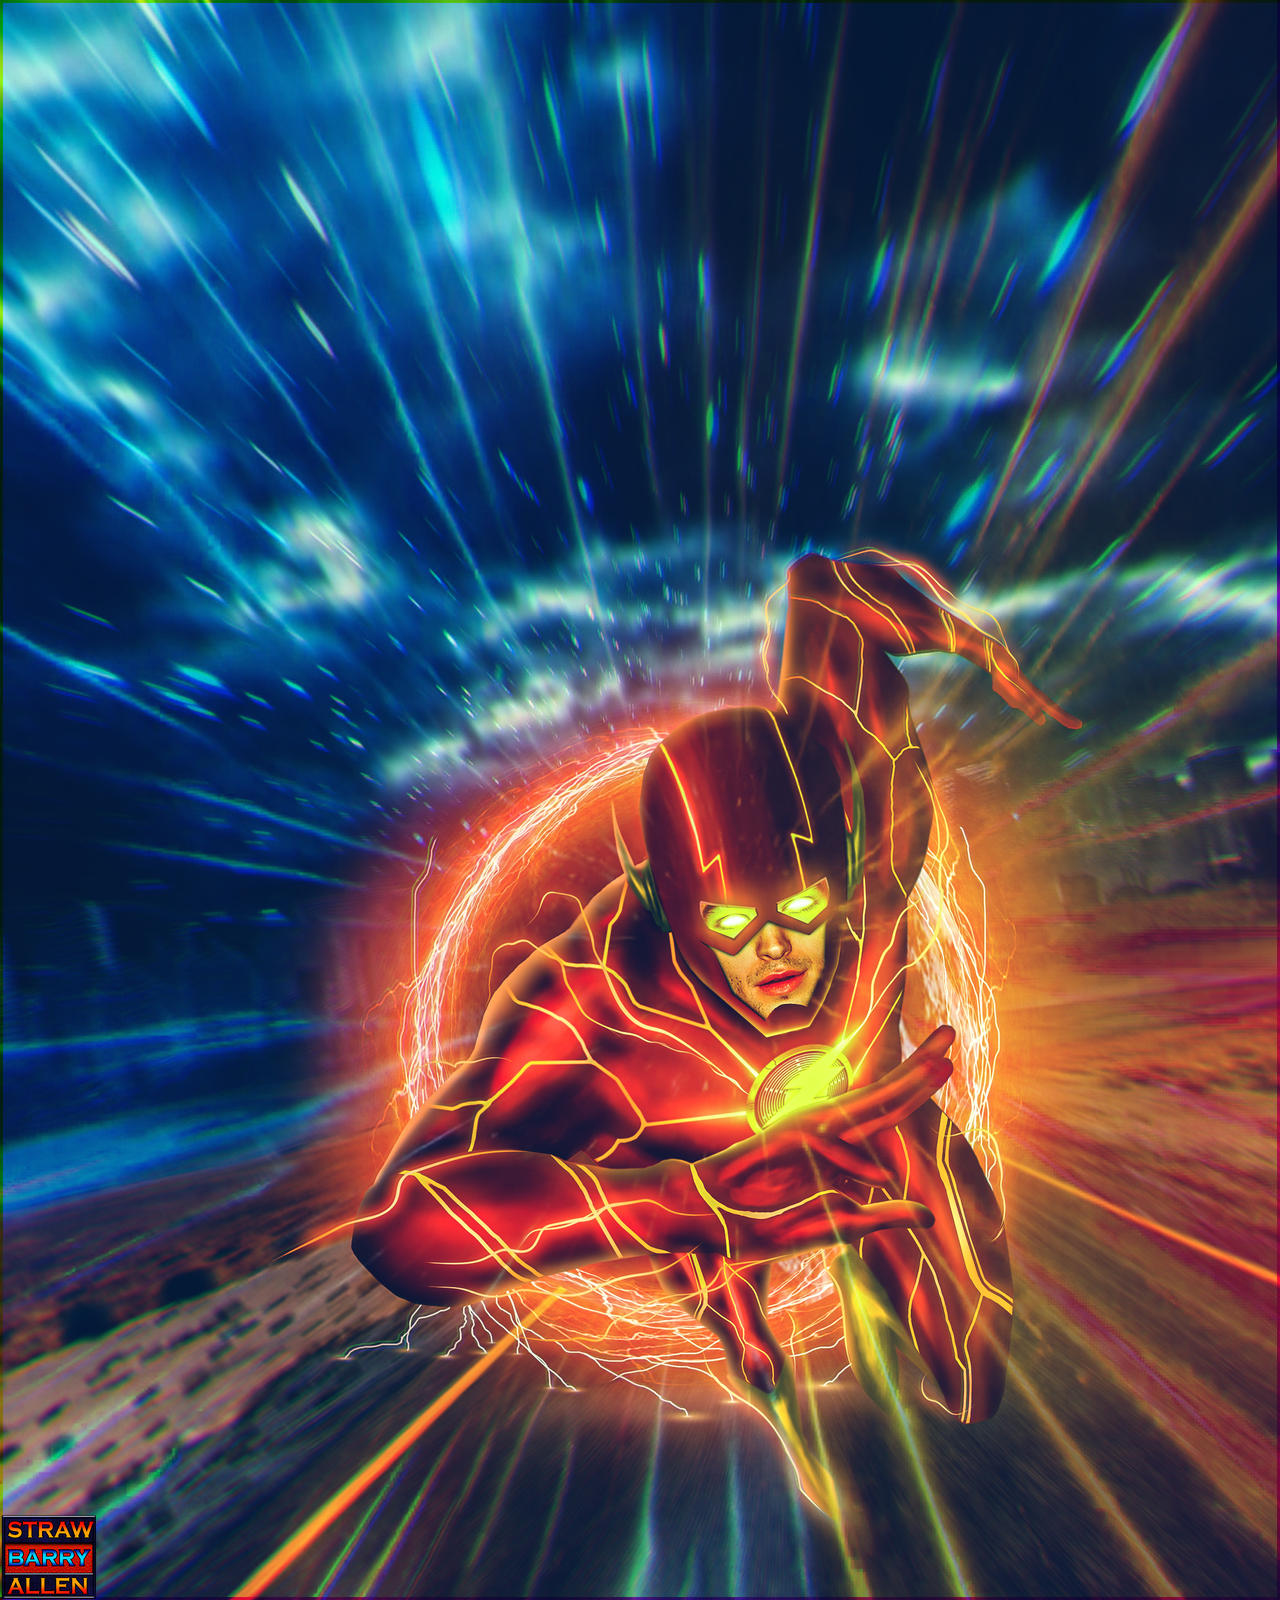 The Flash - Final Run by Ant33rux on DeviantArt